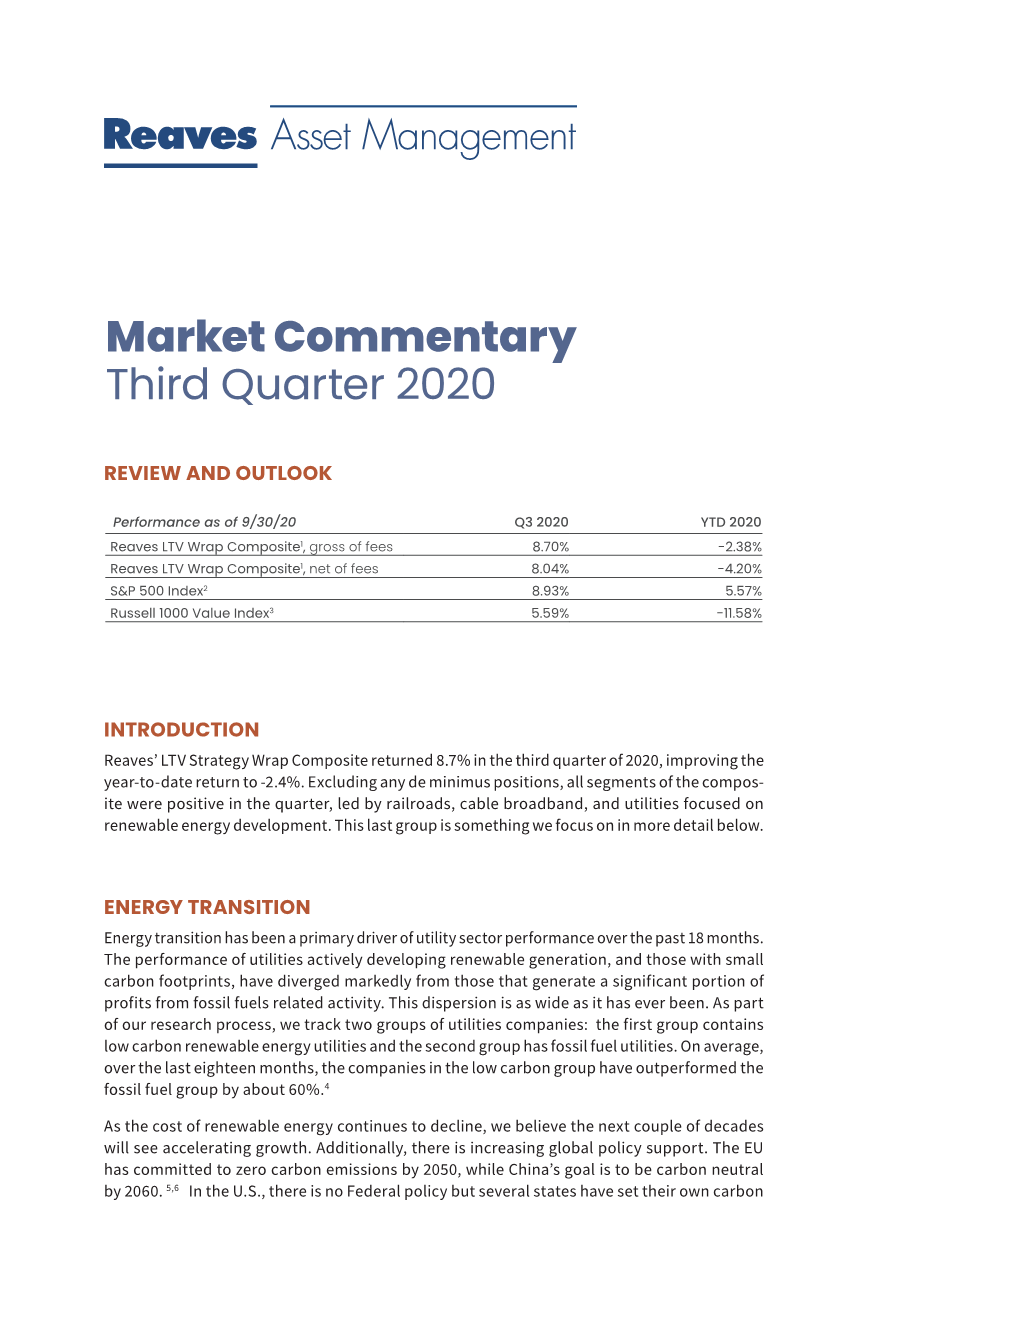 Market Commentary Third Quarter 2020